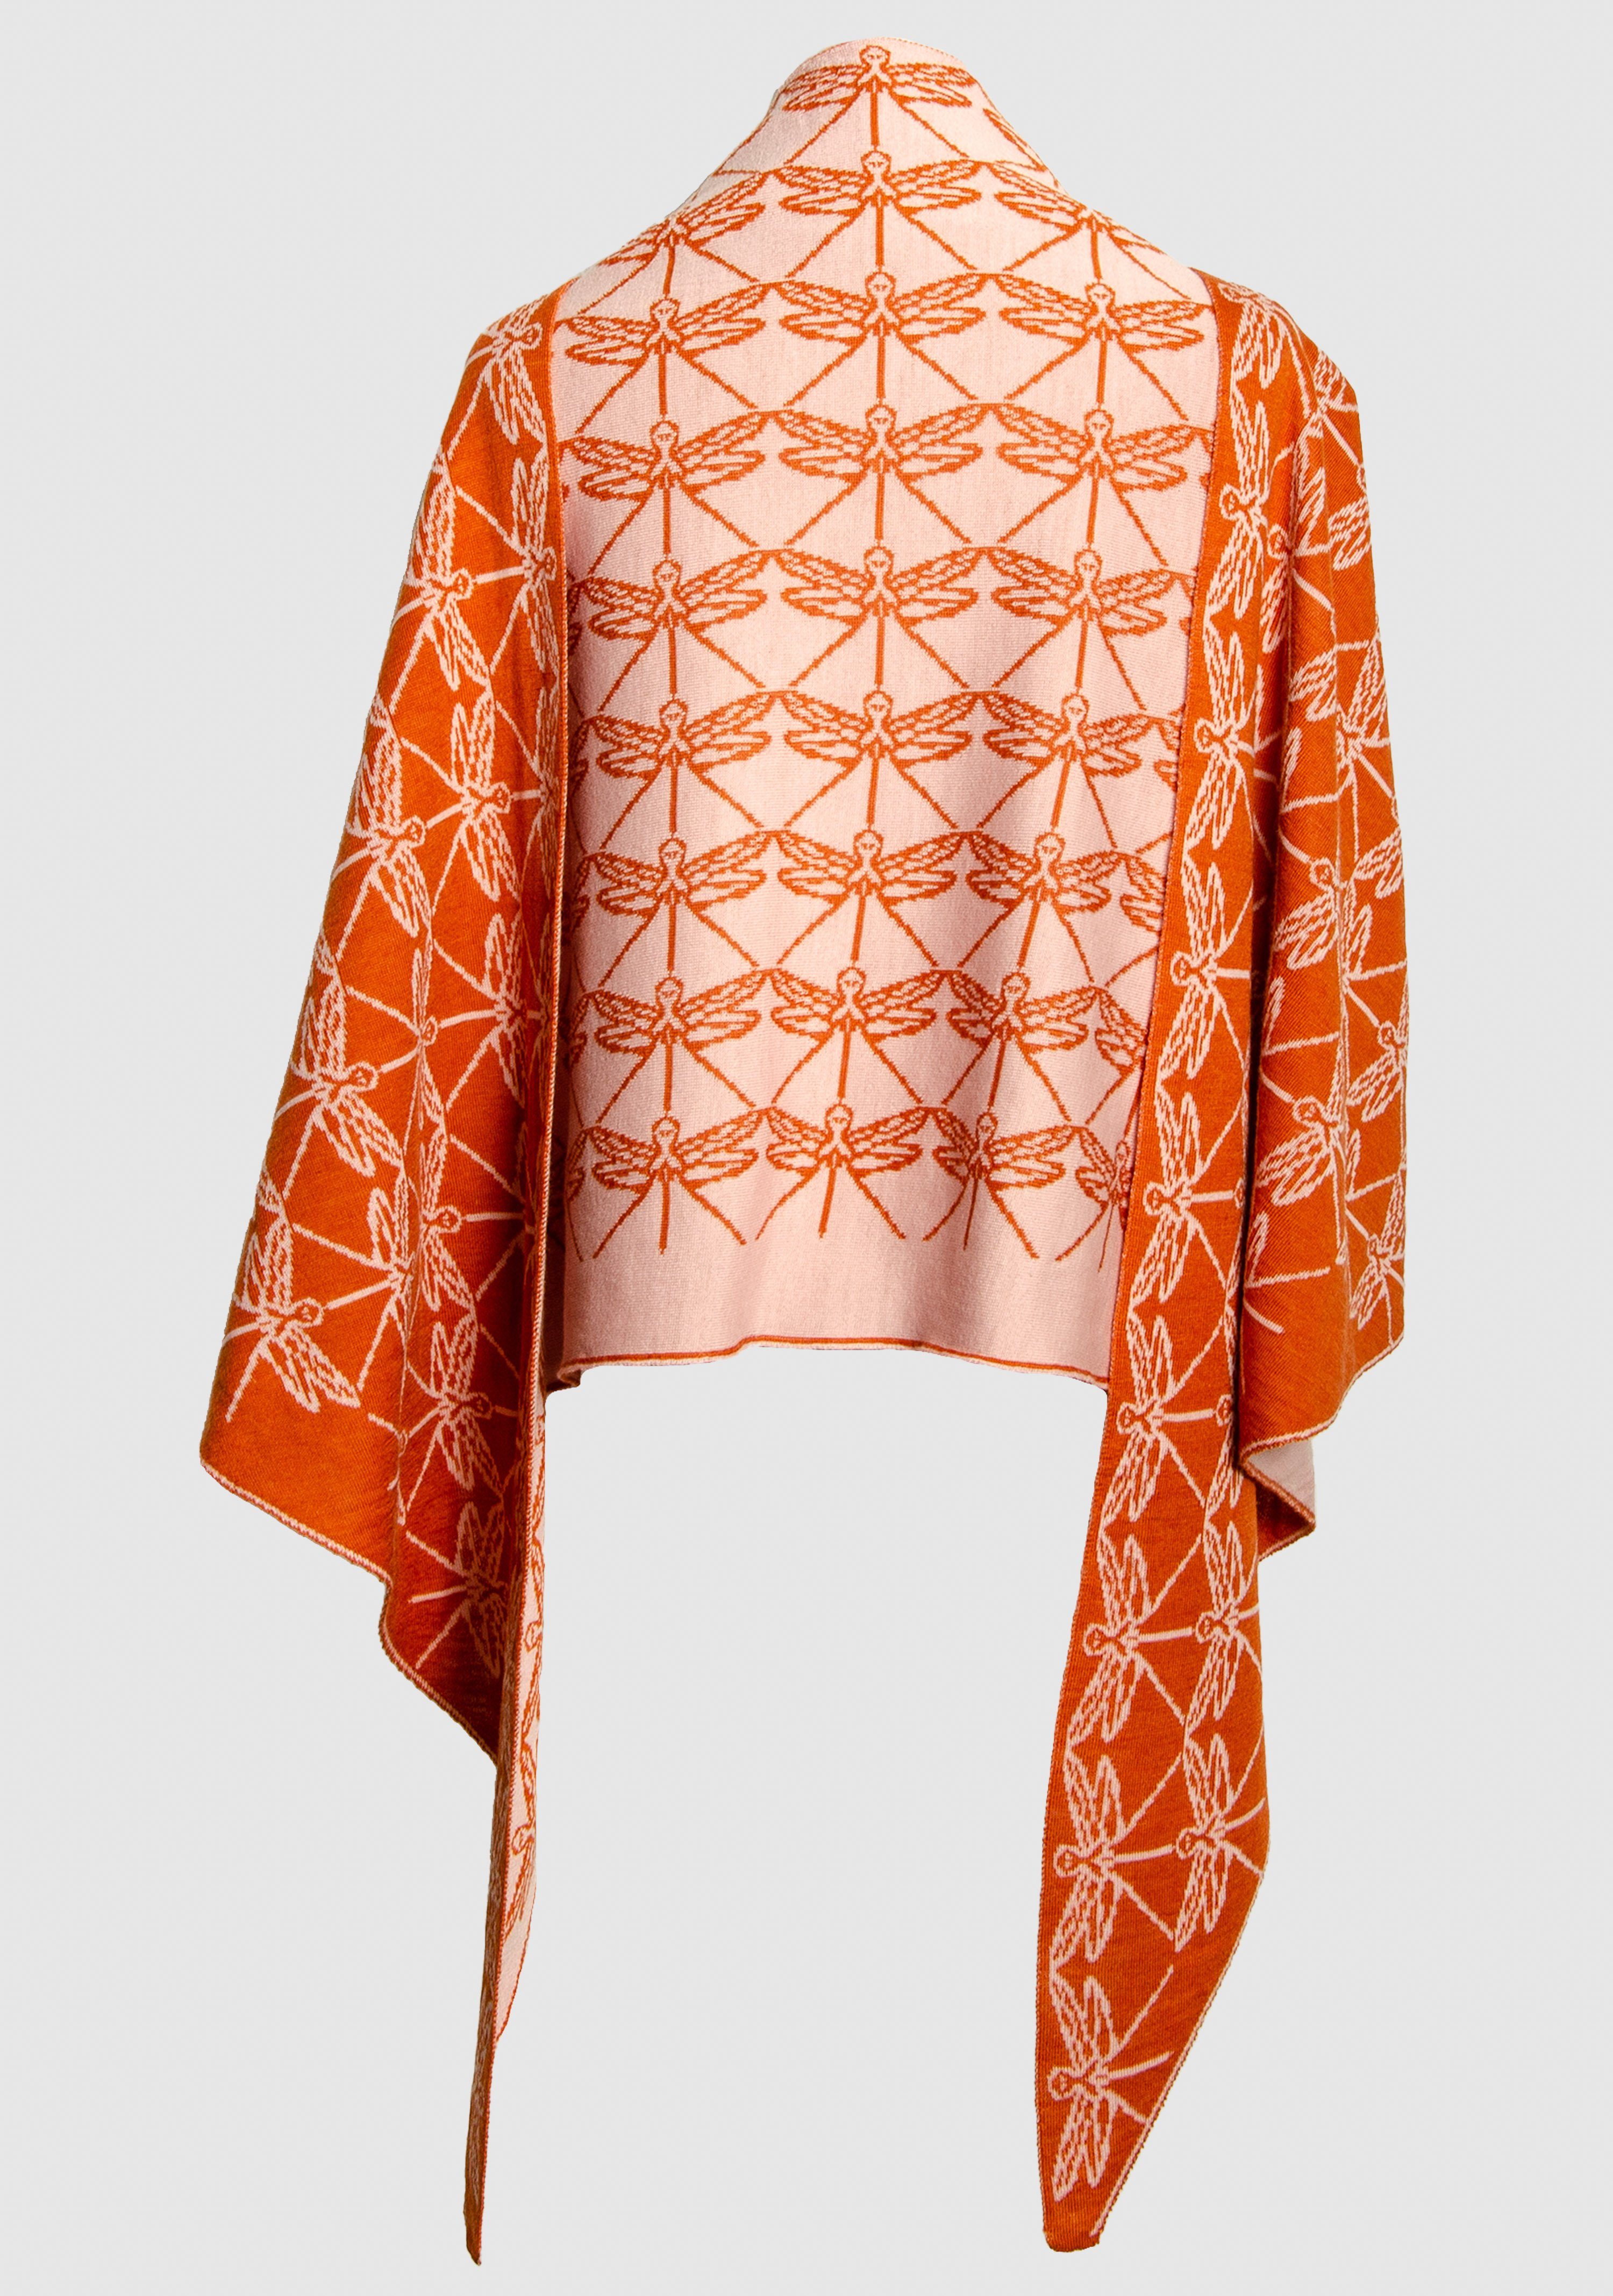 LANARTO slow fashion Modetuch Schultertuch Libelle 100% Merino extrasoft zweifarbig orange_rosa